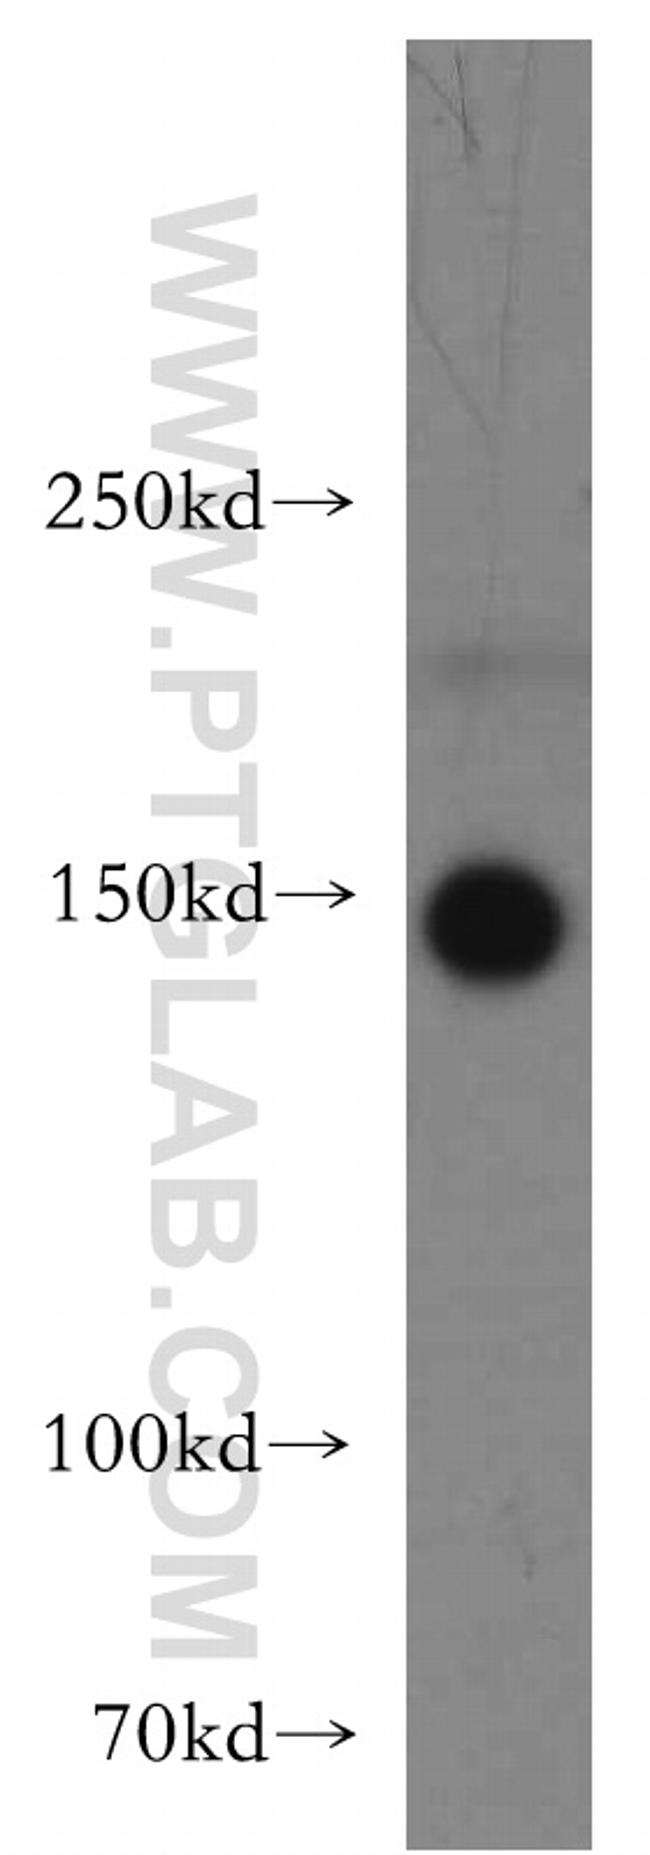 TAOK2 Antibody in Western Blot (WB)